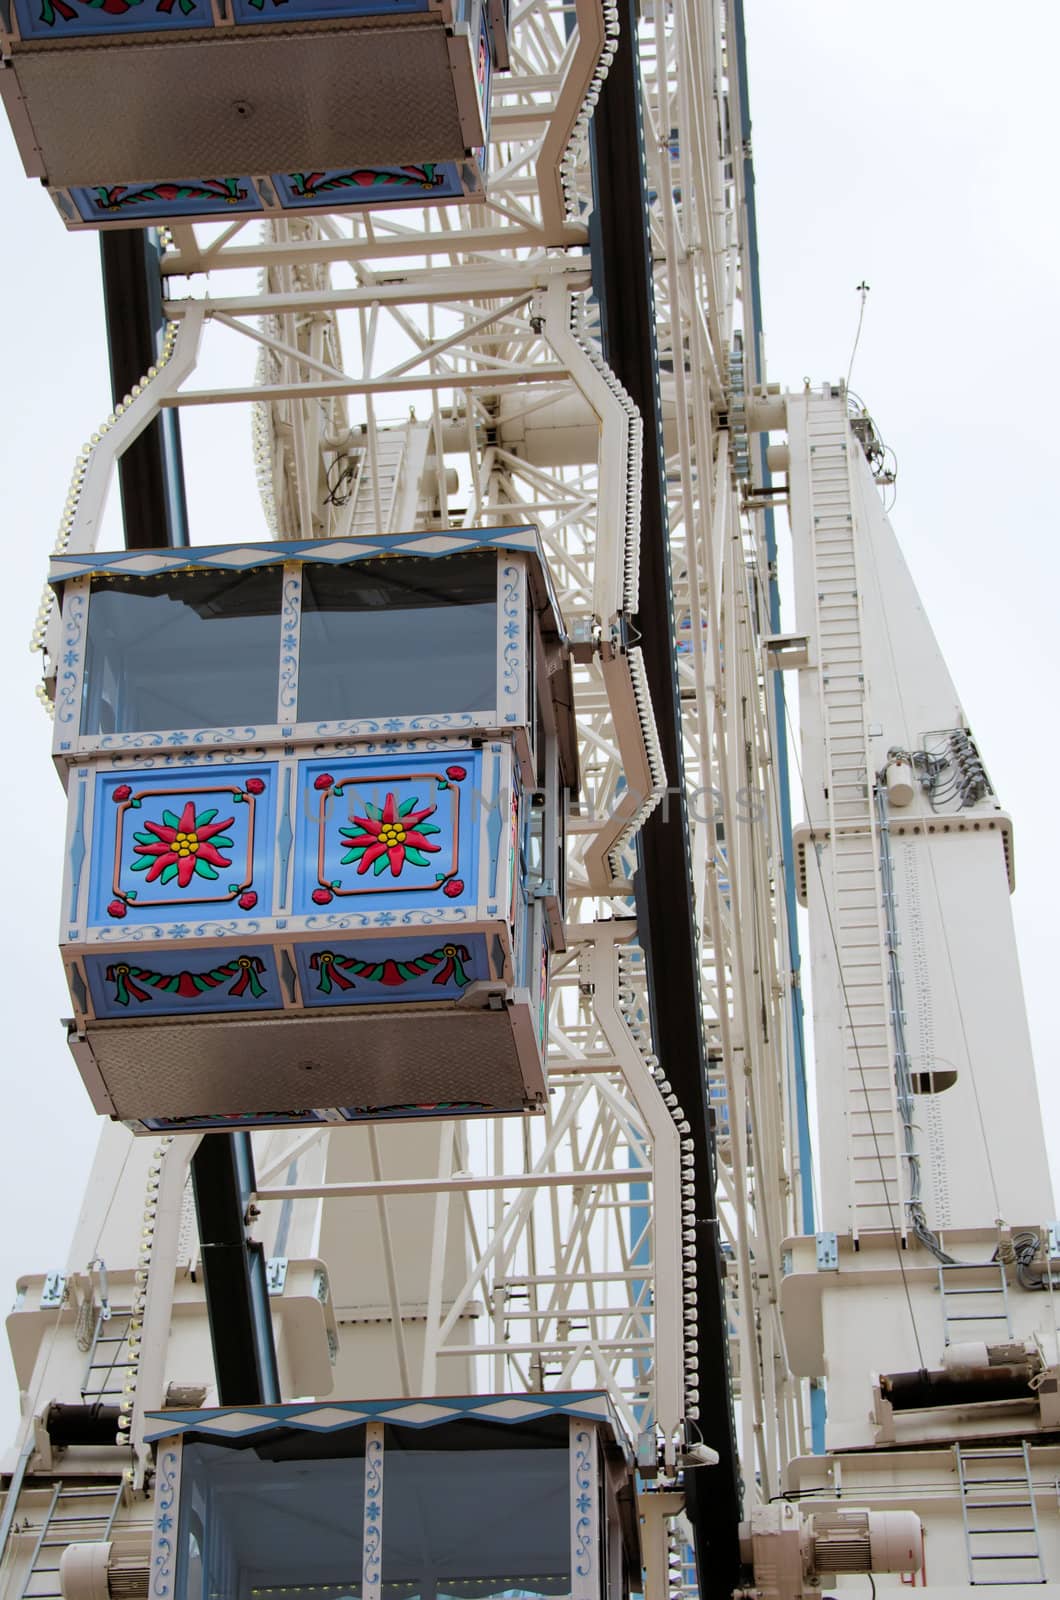 the Ferris wheel in a park